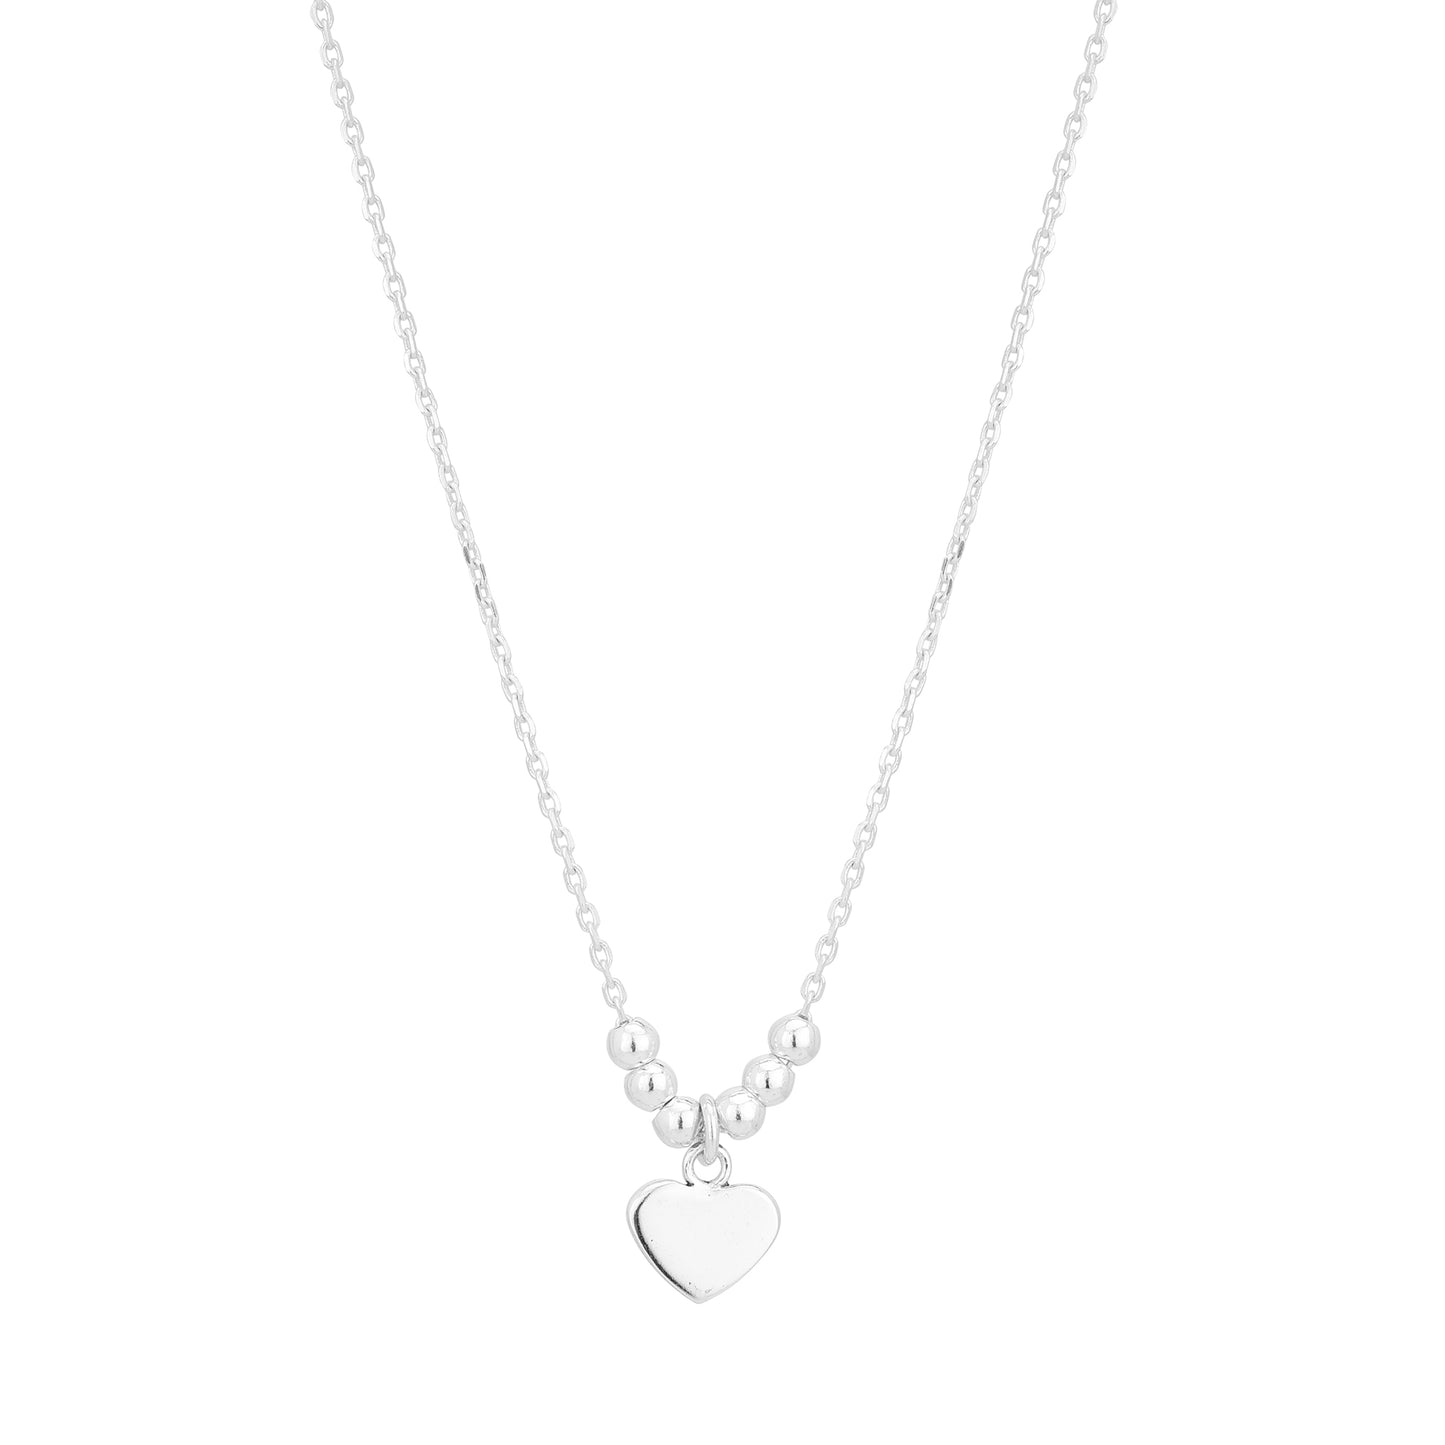 Carlton London Silver Beaded Heart Charm Pendant Necklace